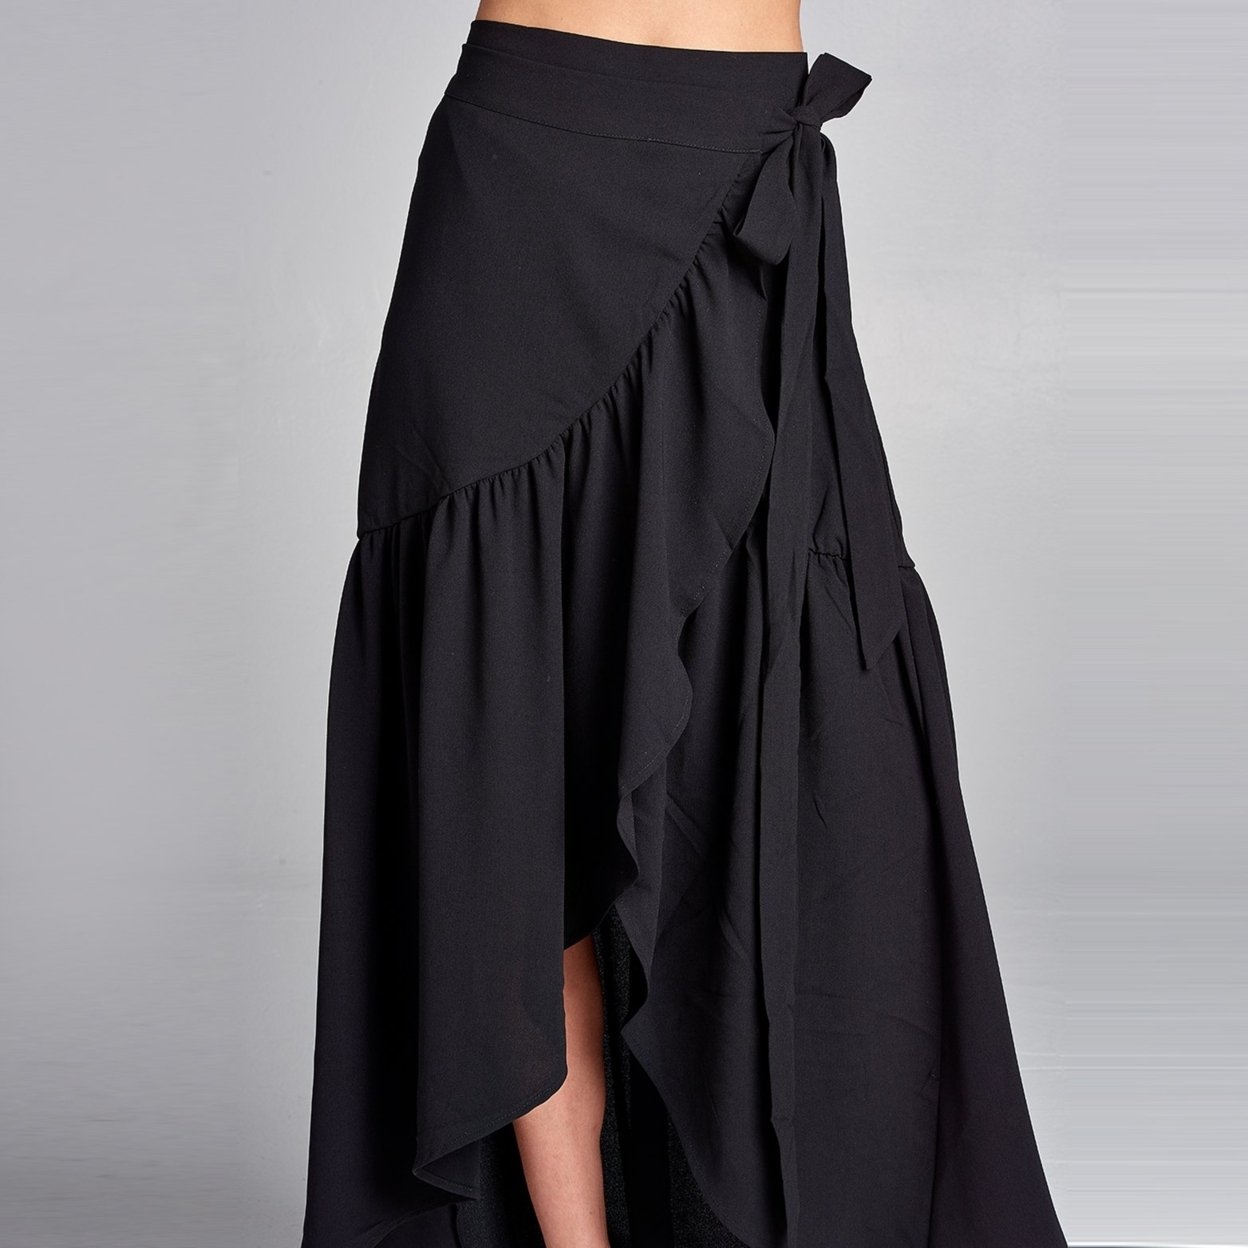 Frilled Wrap Skirt - Black, Medium (8-10)